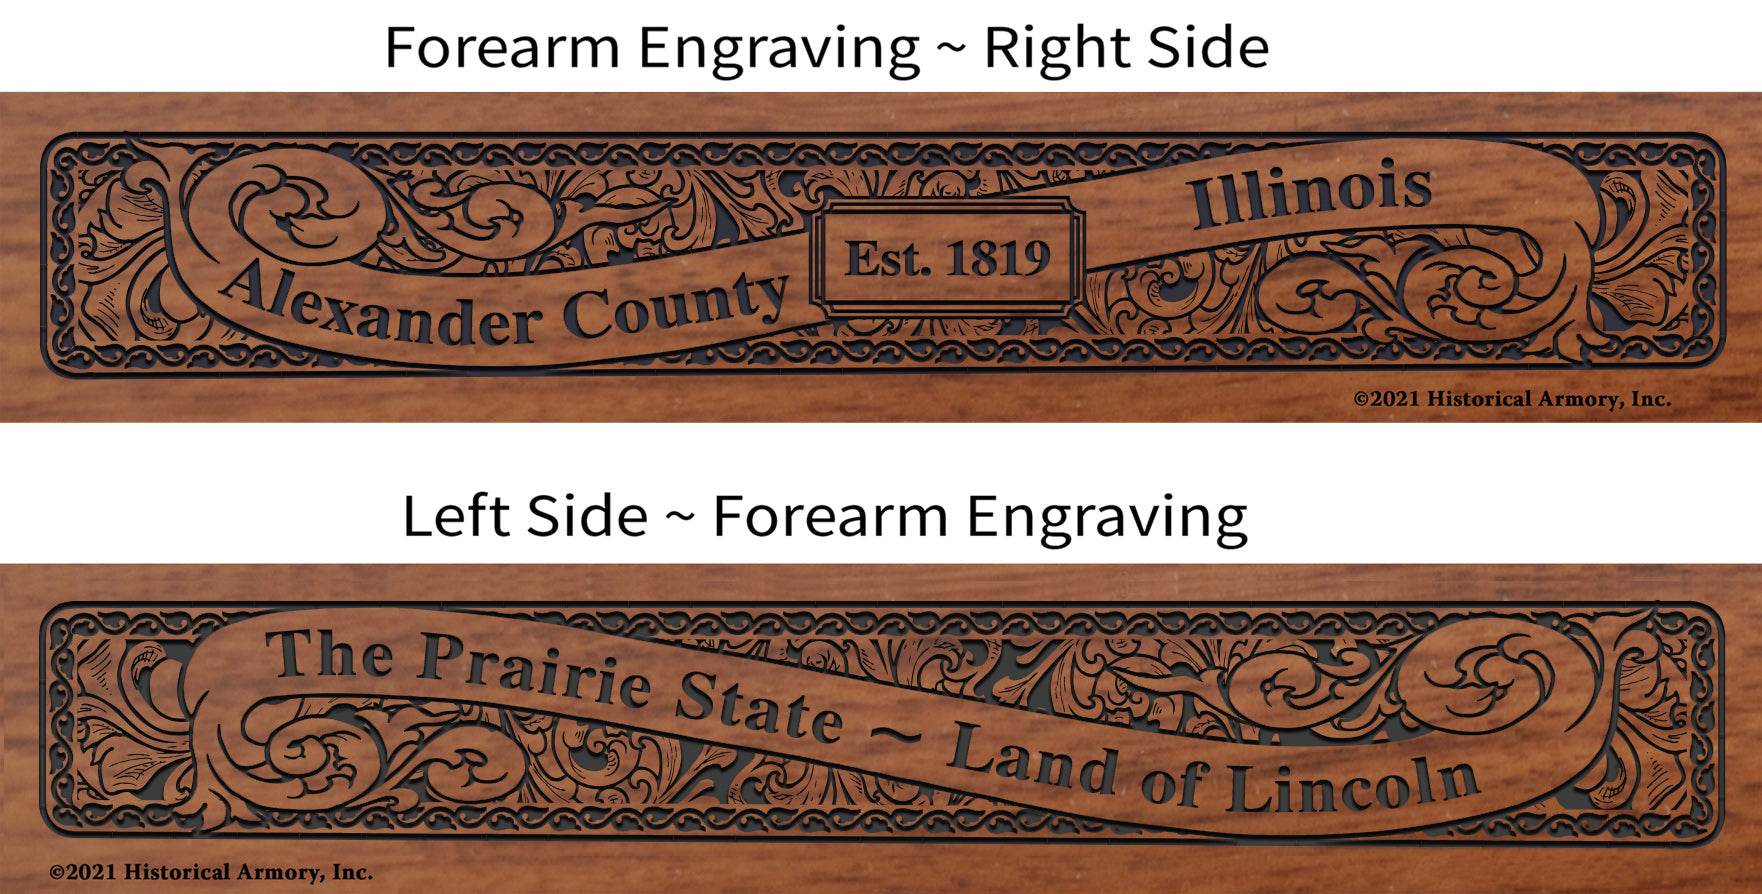 Alexander County Illinois Establishment and Motto History Engraved Rifle Forearm